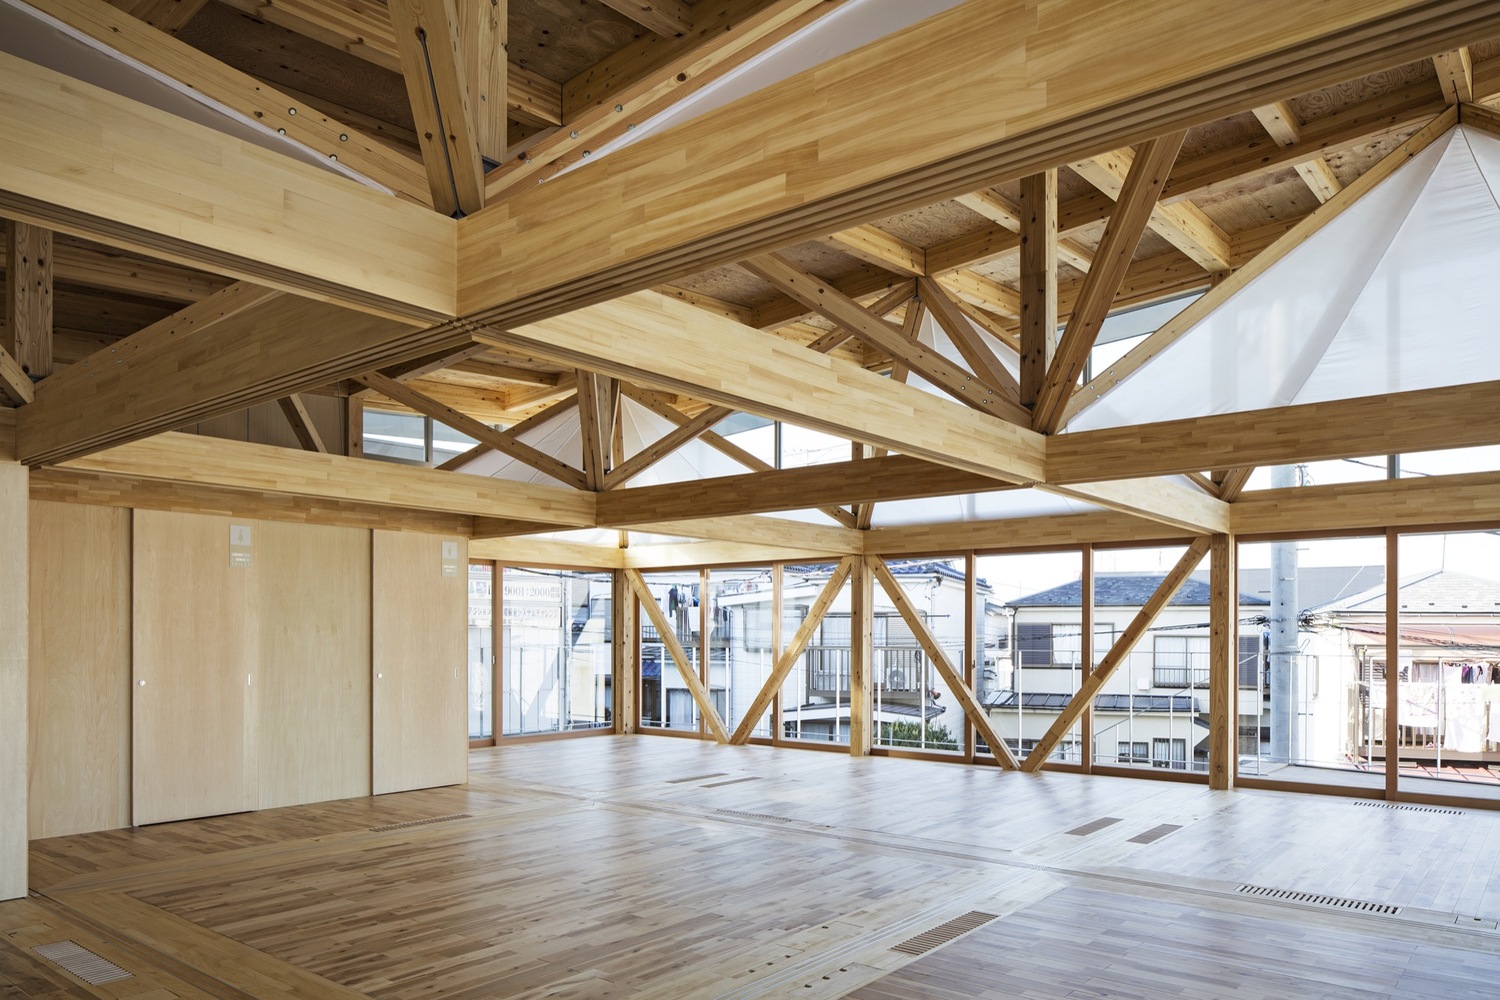 Substrate Factory Ayase by Aki Hamada Architects